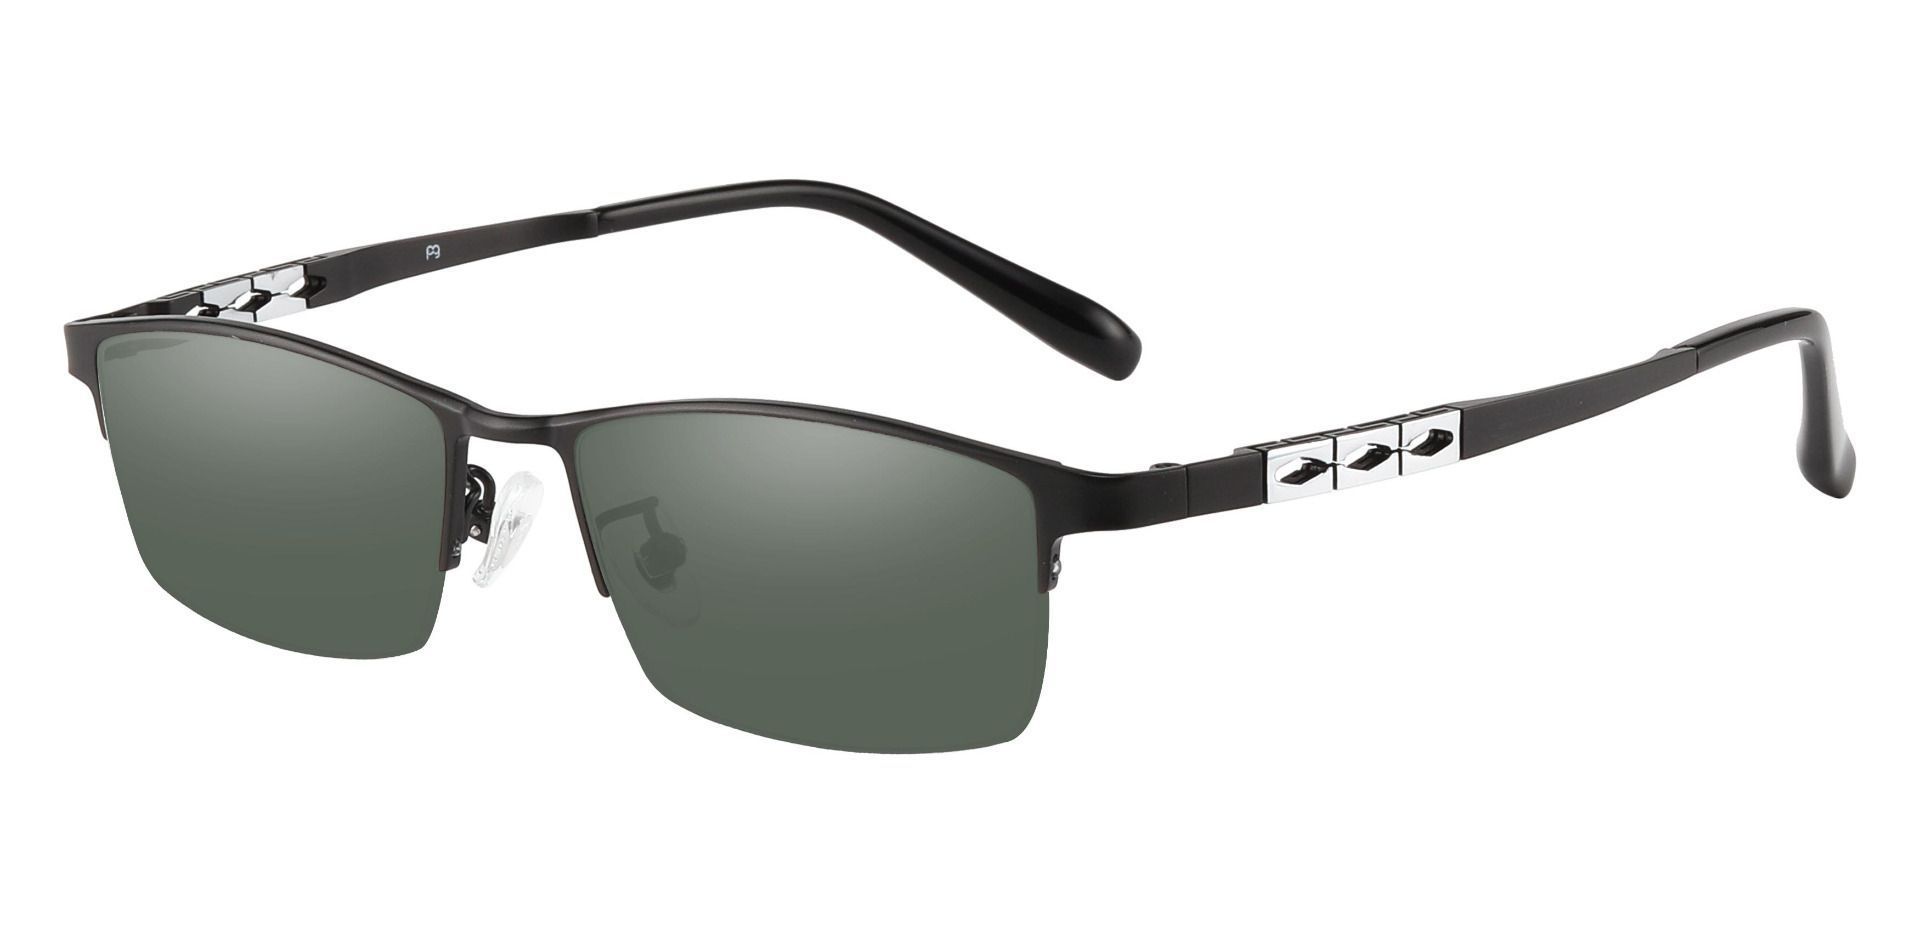 Burlington Rectangle Lined Bifocal Sunglasses - Black Frame With Green Lenses